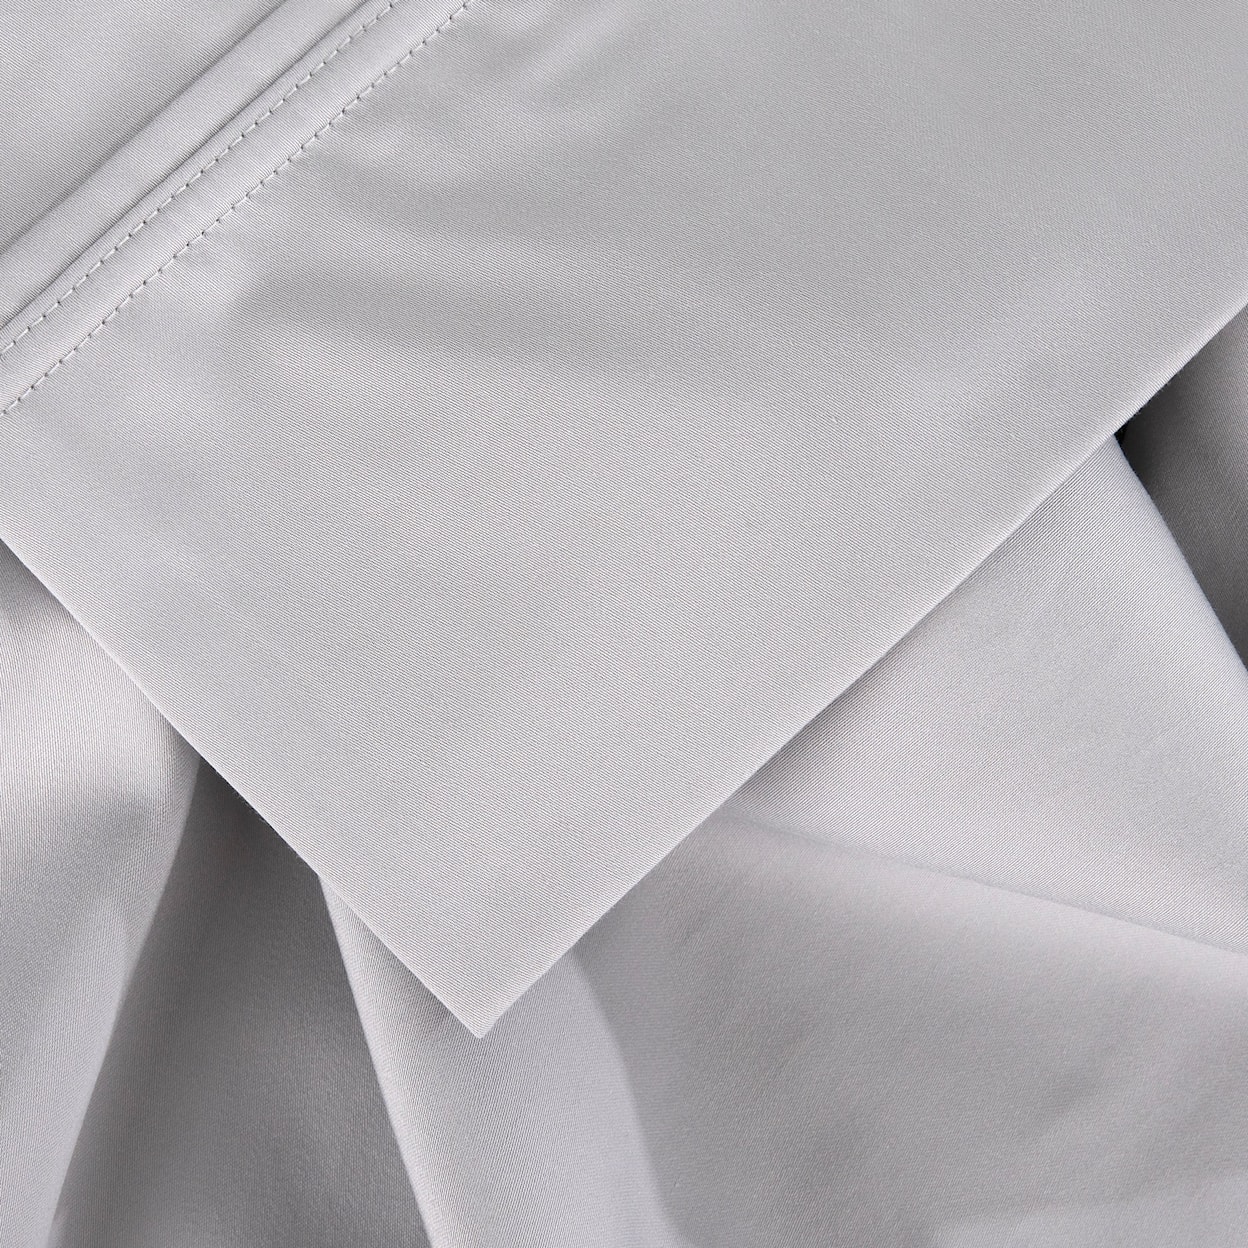 Bedgear Hyper Cotton Sheets Sheet Set,Grey, King